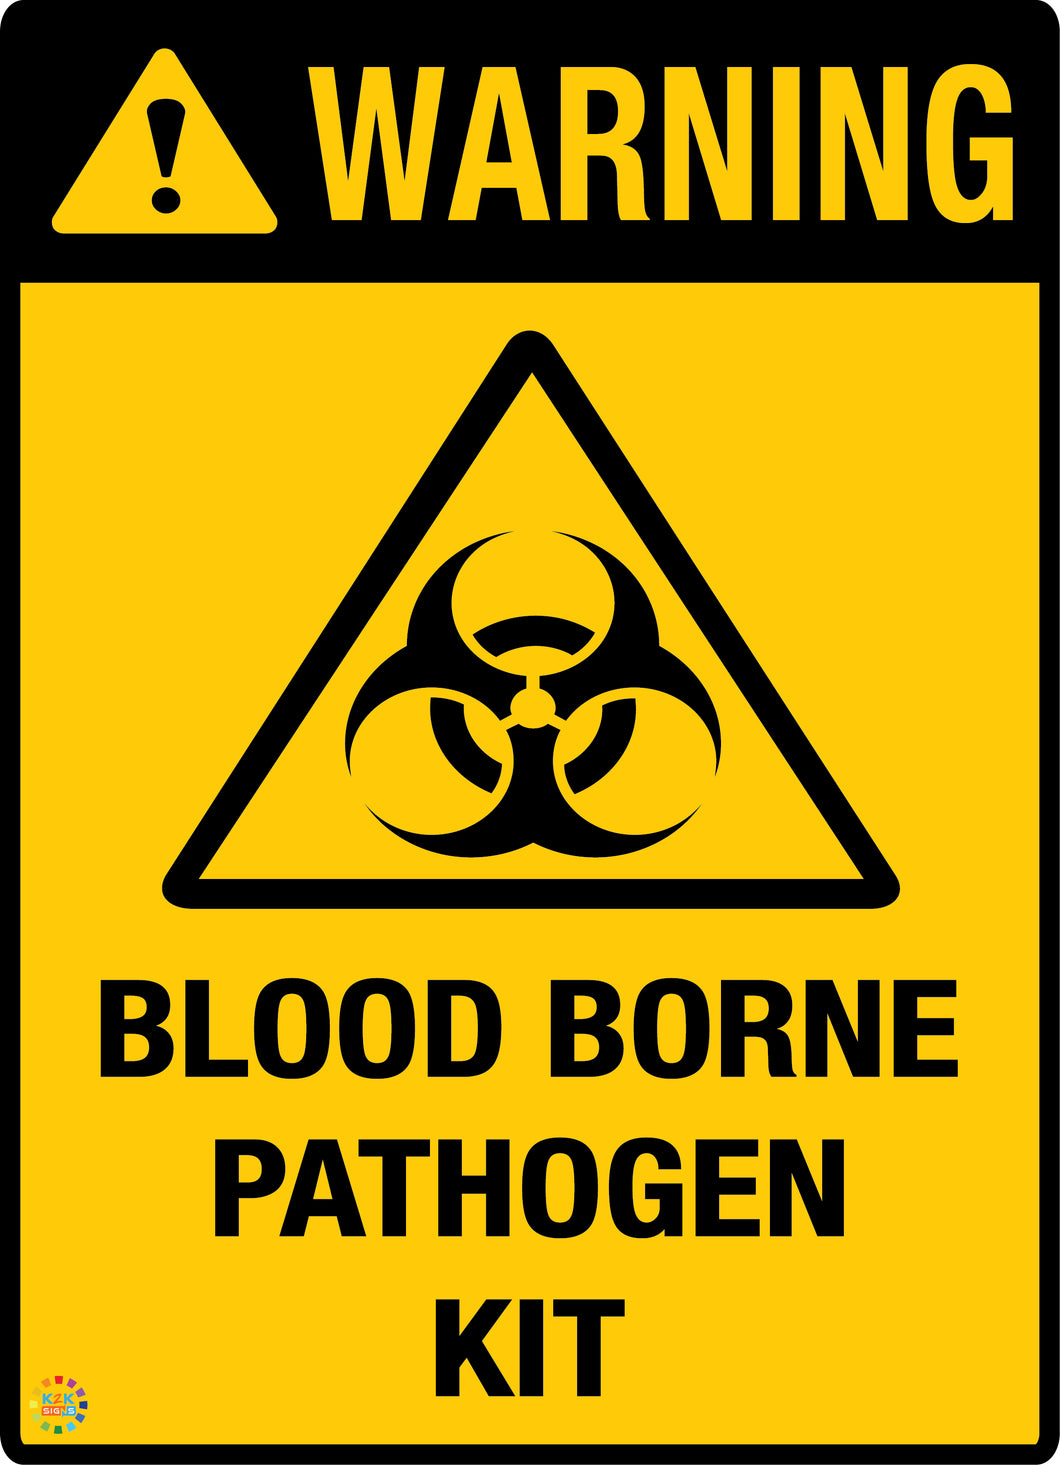 Warning - Blood Borne Pathogen Kit Sign